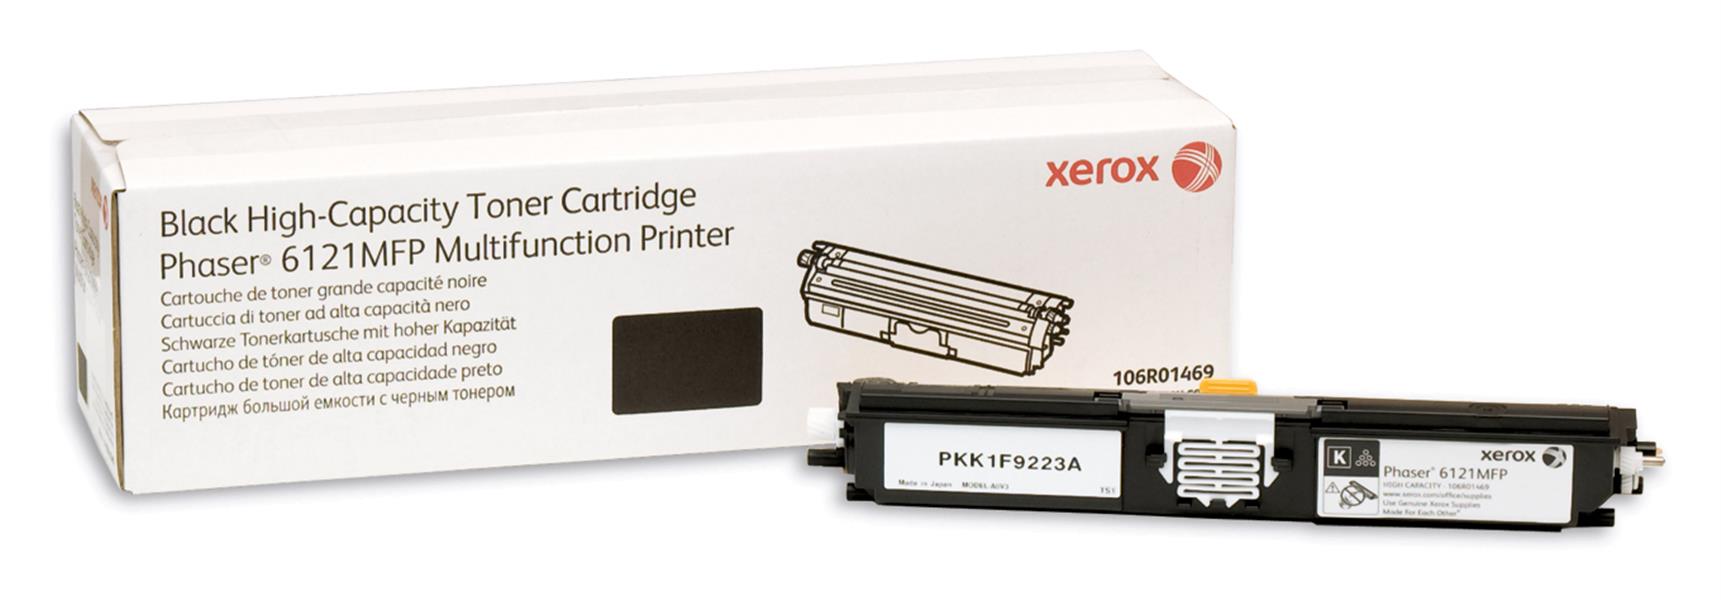 Xerox Phaser 6121Mfp, Tonercartridge Met Extra Grote Inhoud, Zwart (2600 PaginaS)